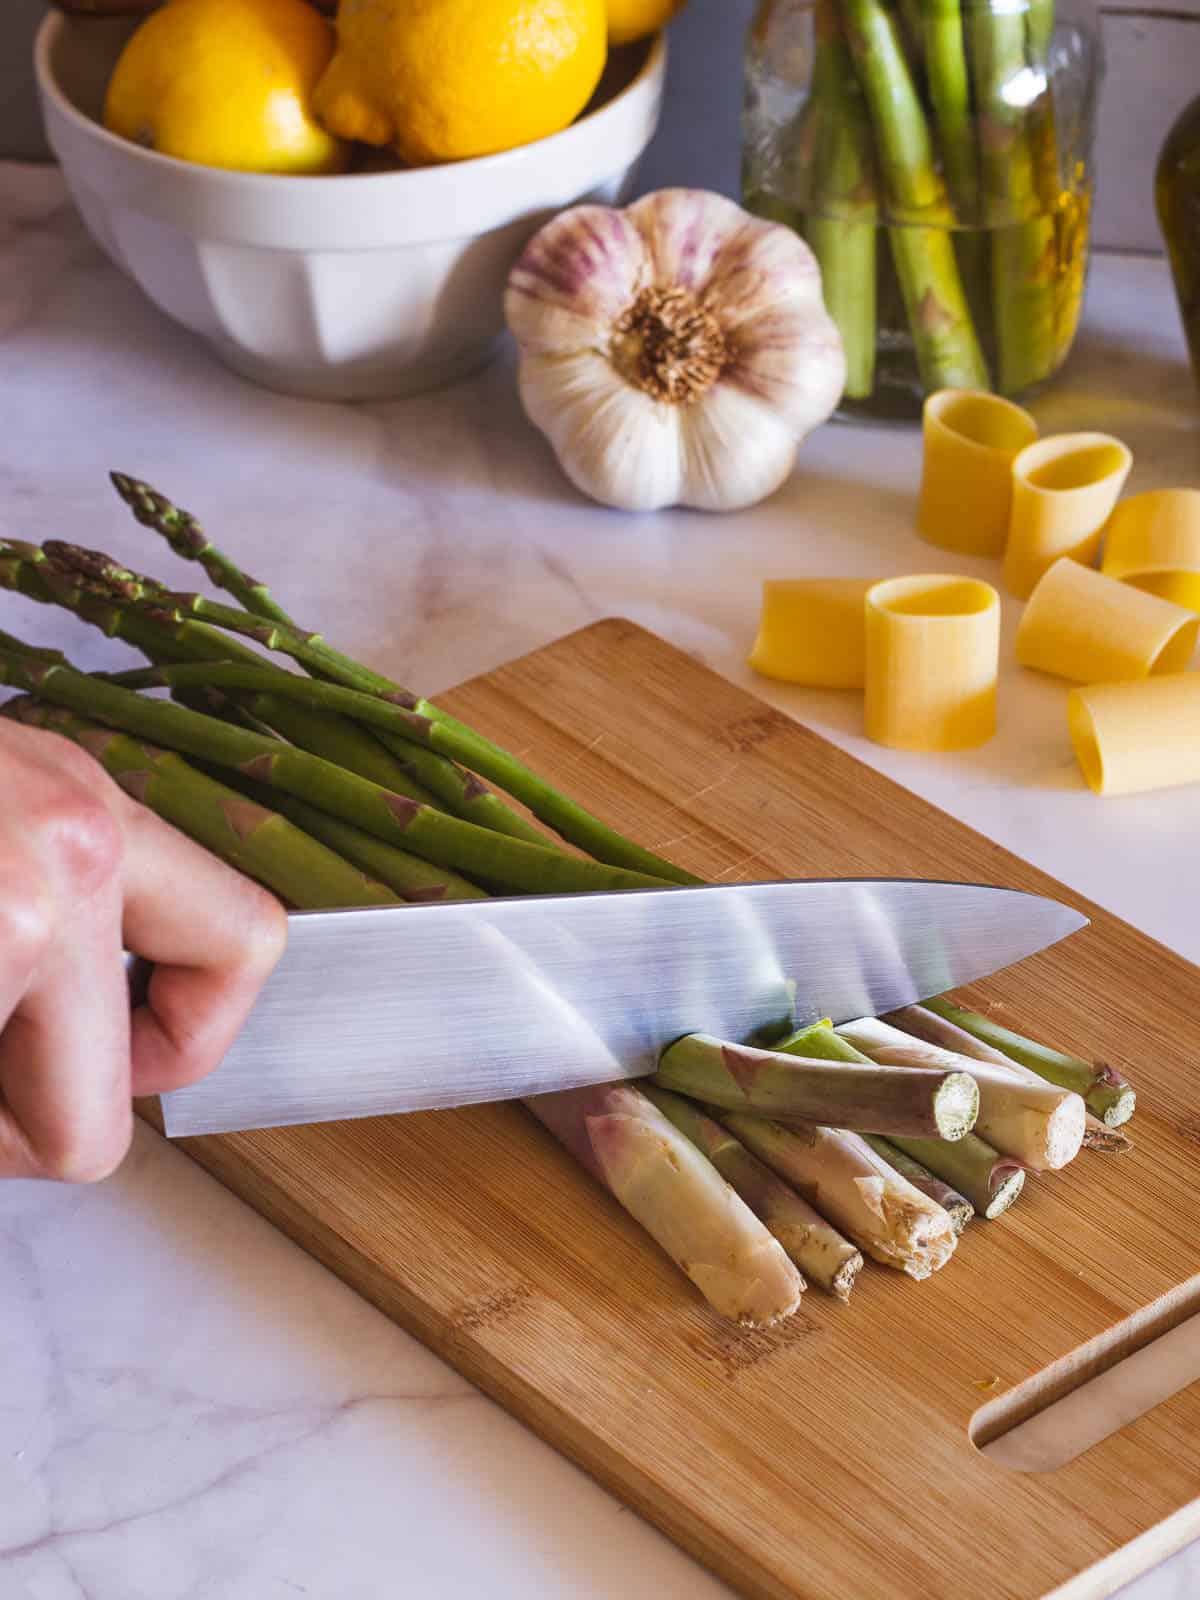 chop asparagus woody ends